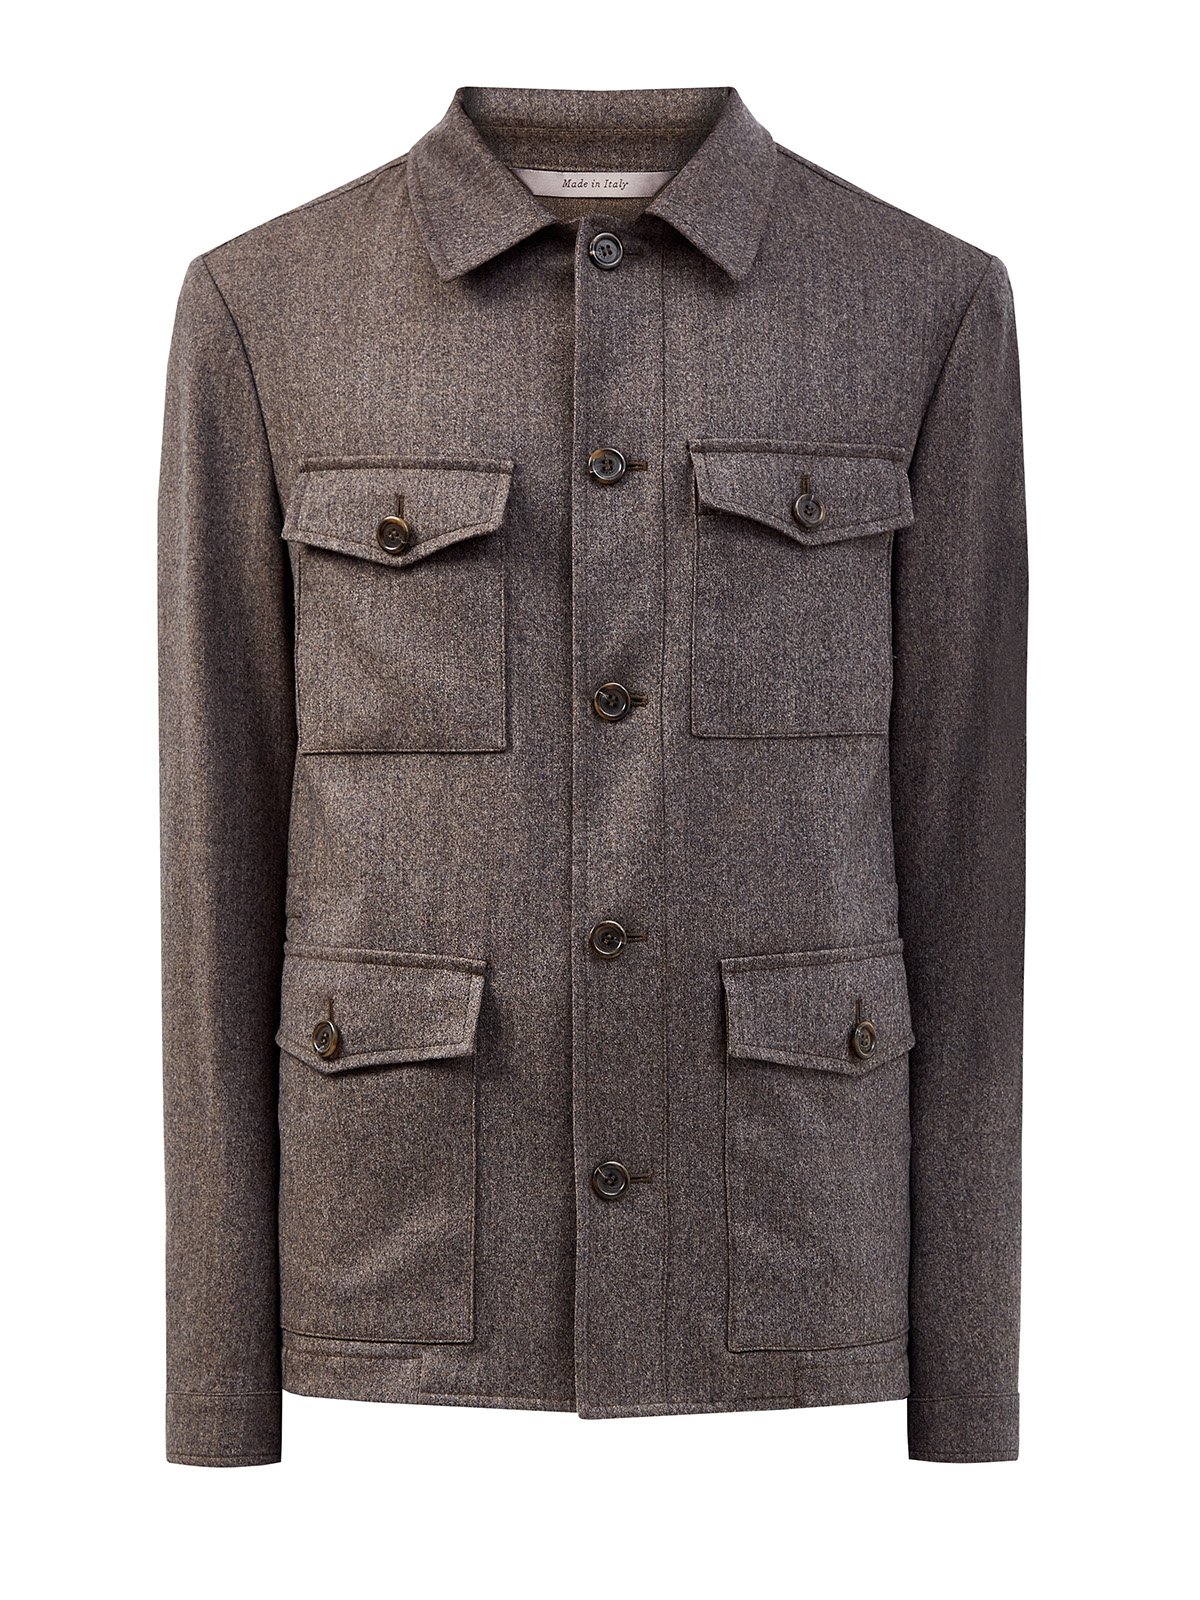 Пиджак в стиле sprezzatura из меланжевой шерсти Impeccabile CANALI, цвет коричневый, размер 52;54;56;48